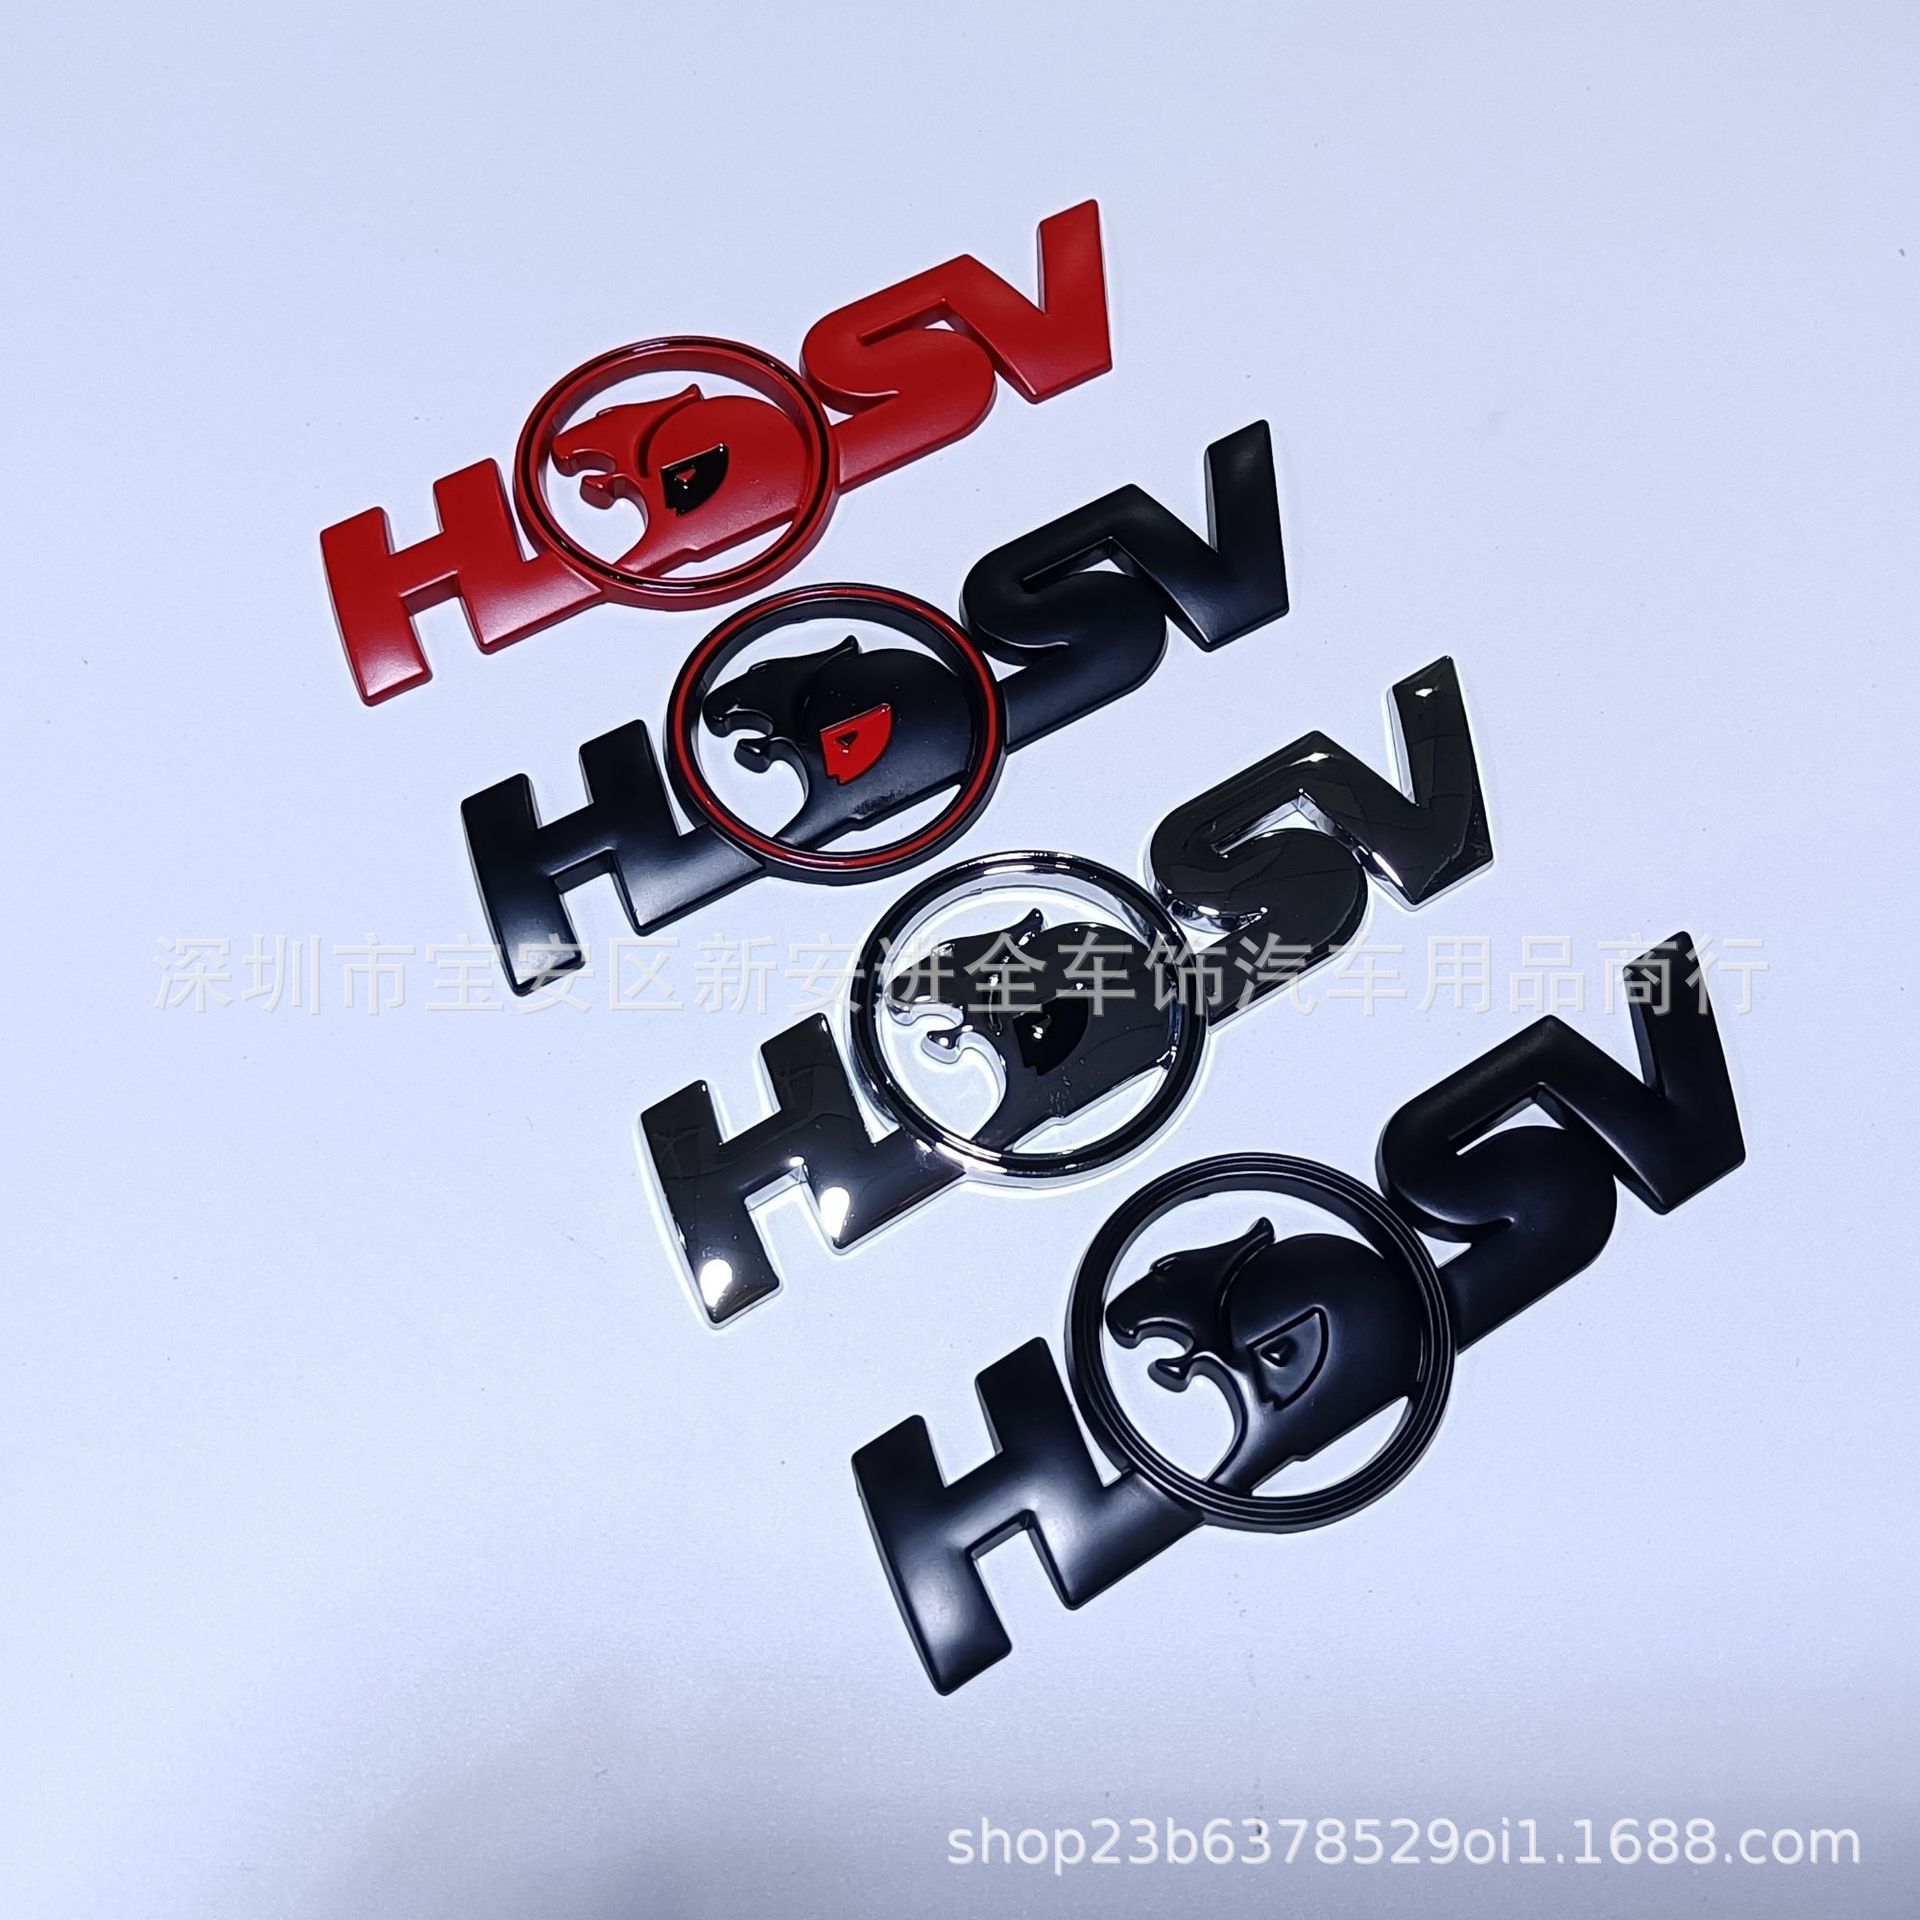 HSV车标适用于汽车霍顿HSV狮子头车贴标改装叶子板侧标个性车尾标